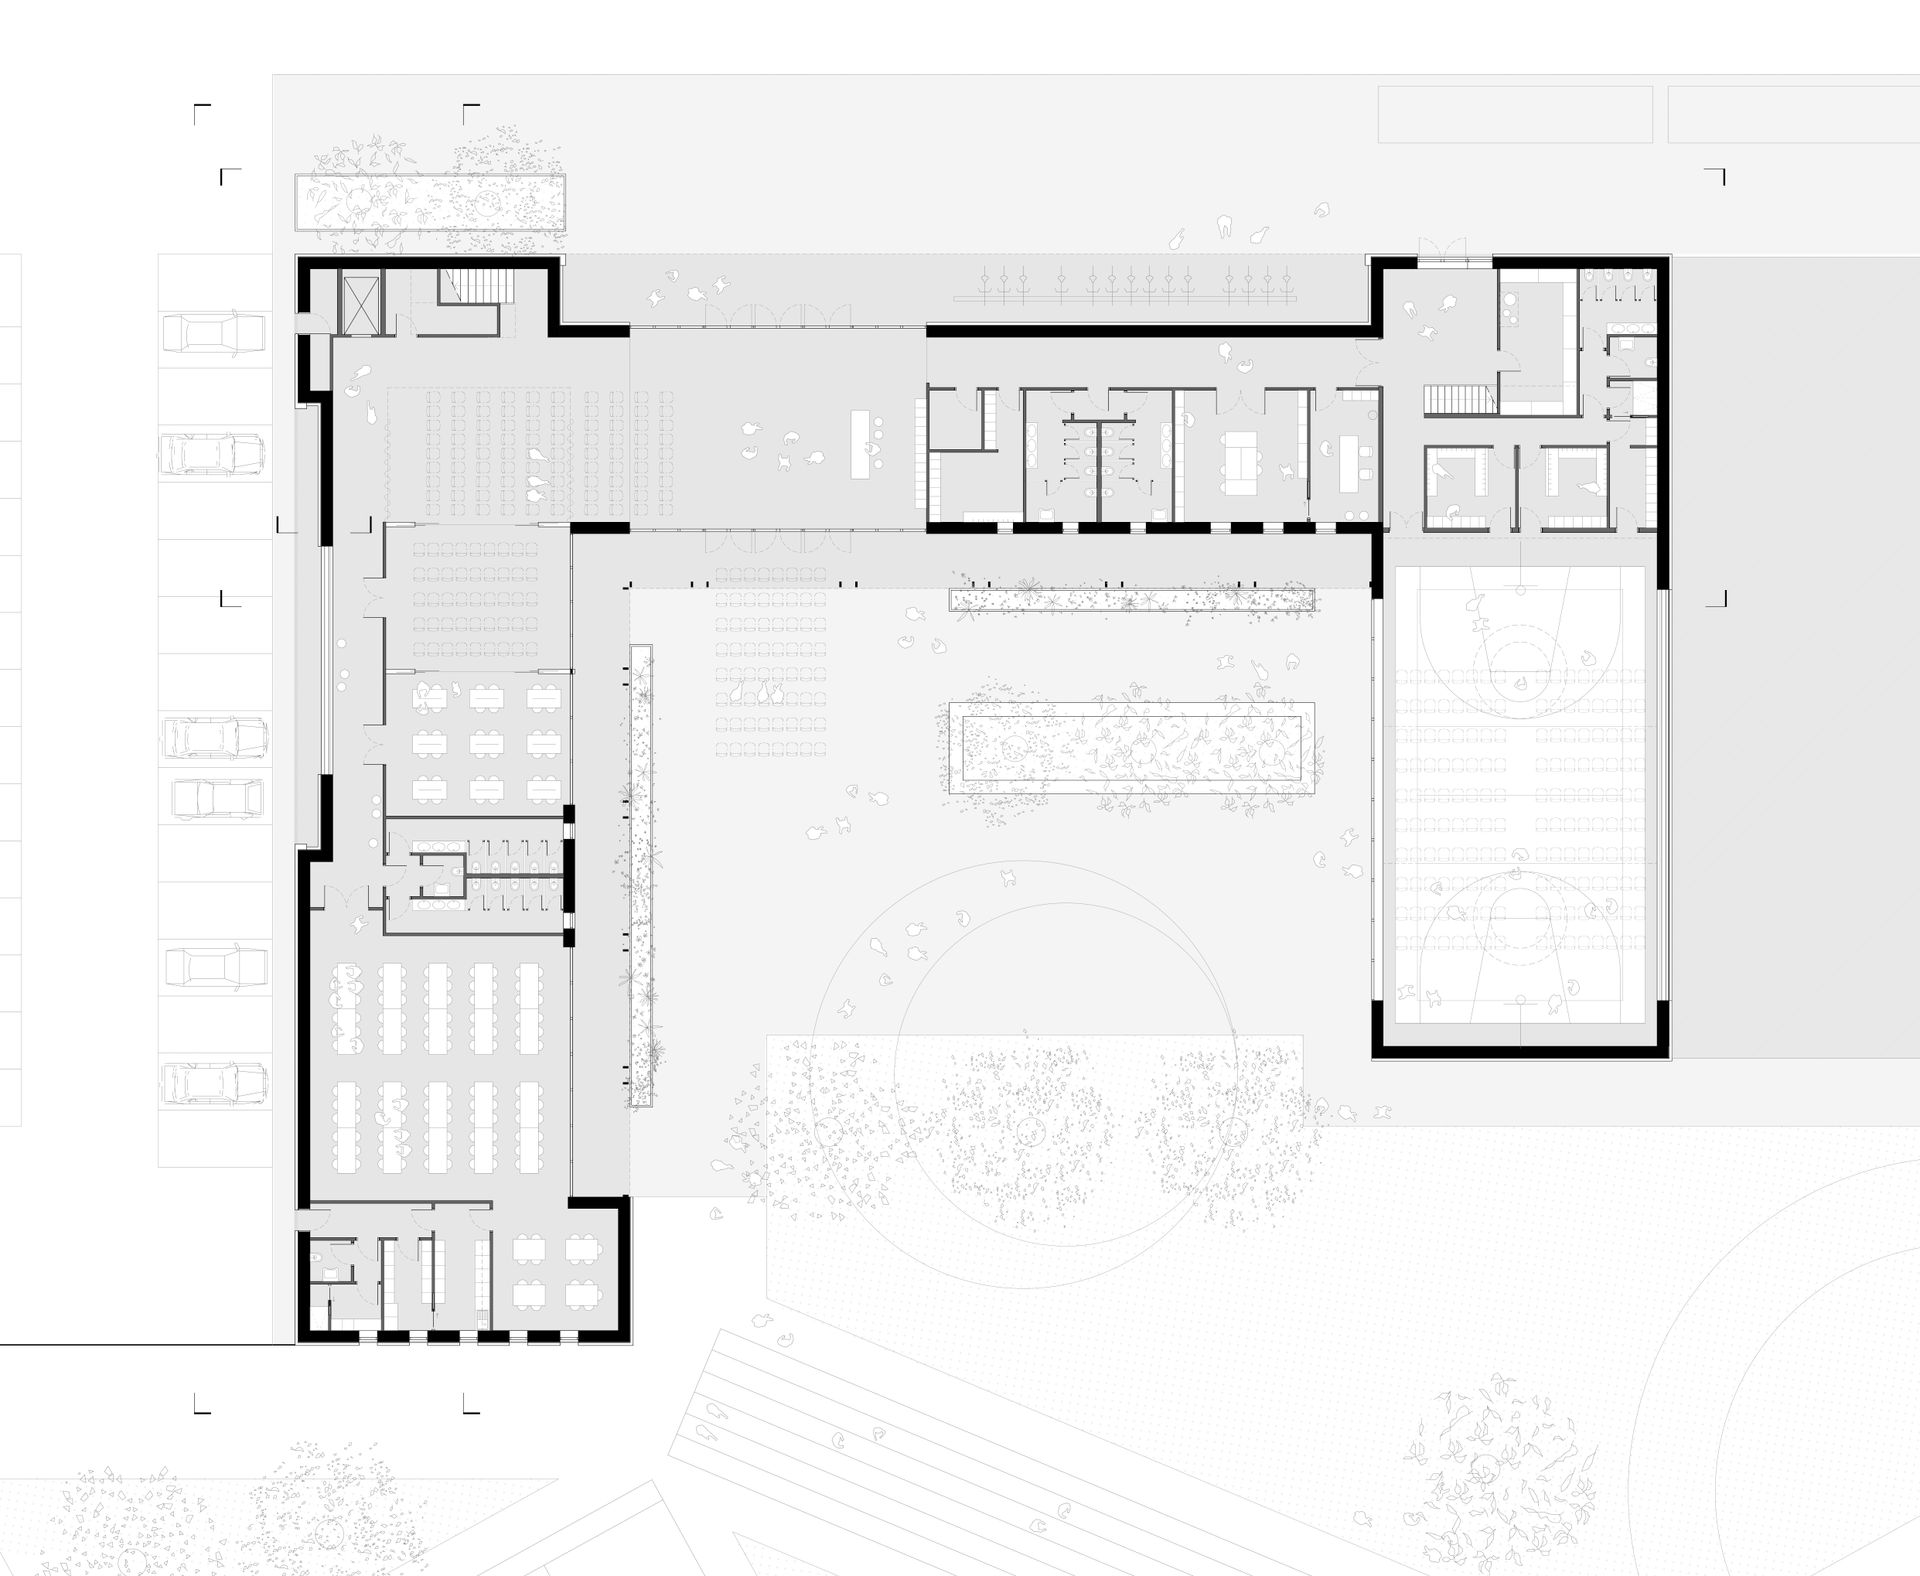 Avezzano primary school project, reuse of local materials. Officina Magisafi architecture design studio - first floor plan